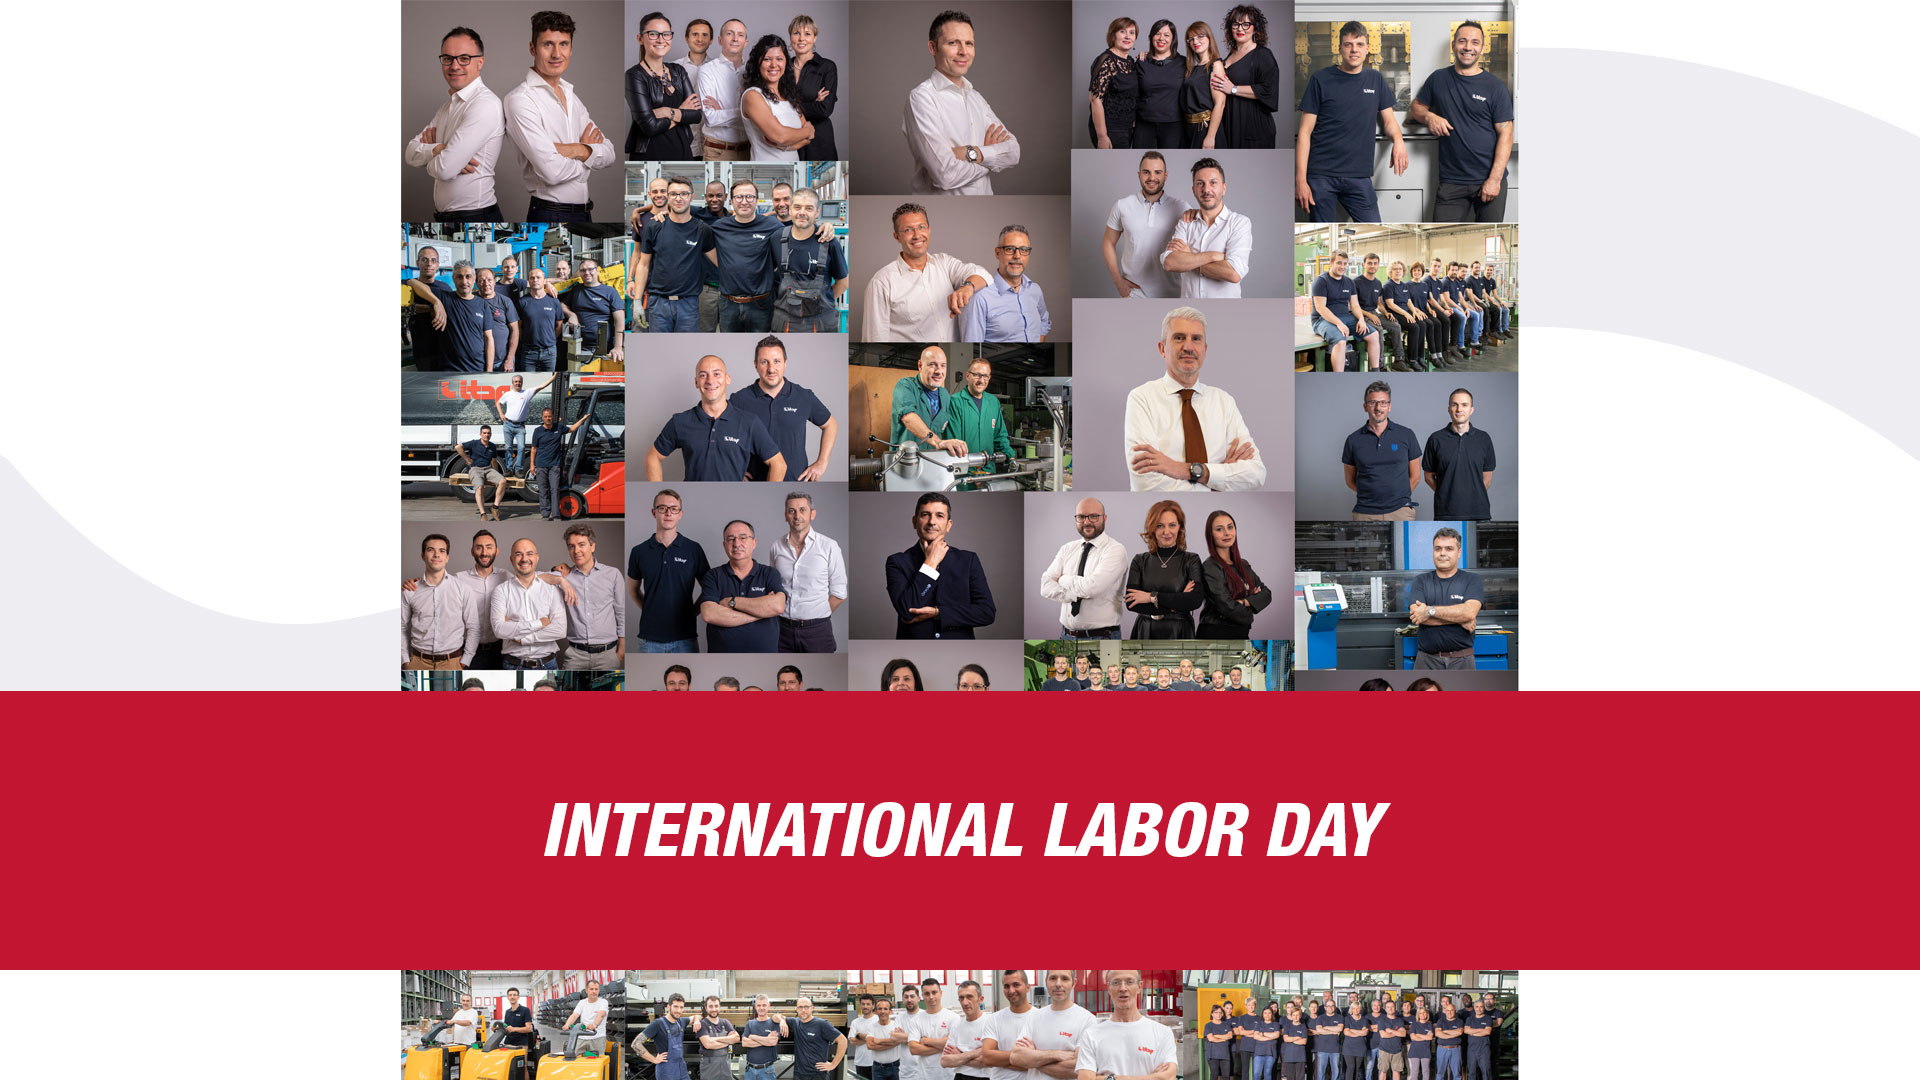 International labor day